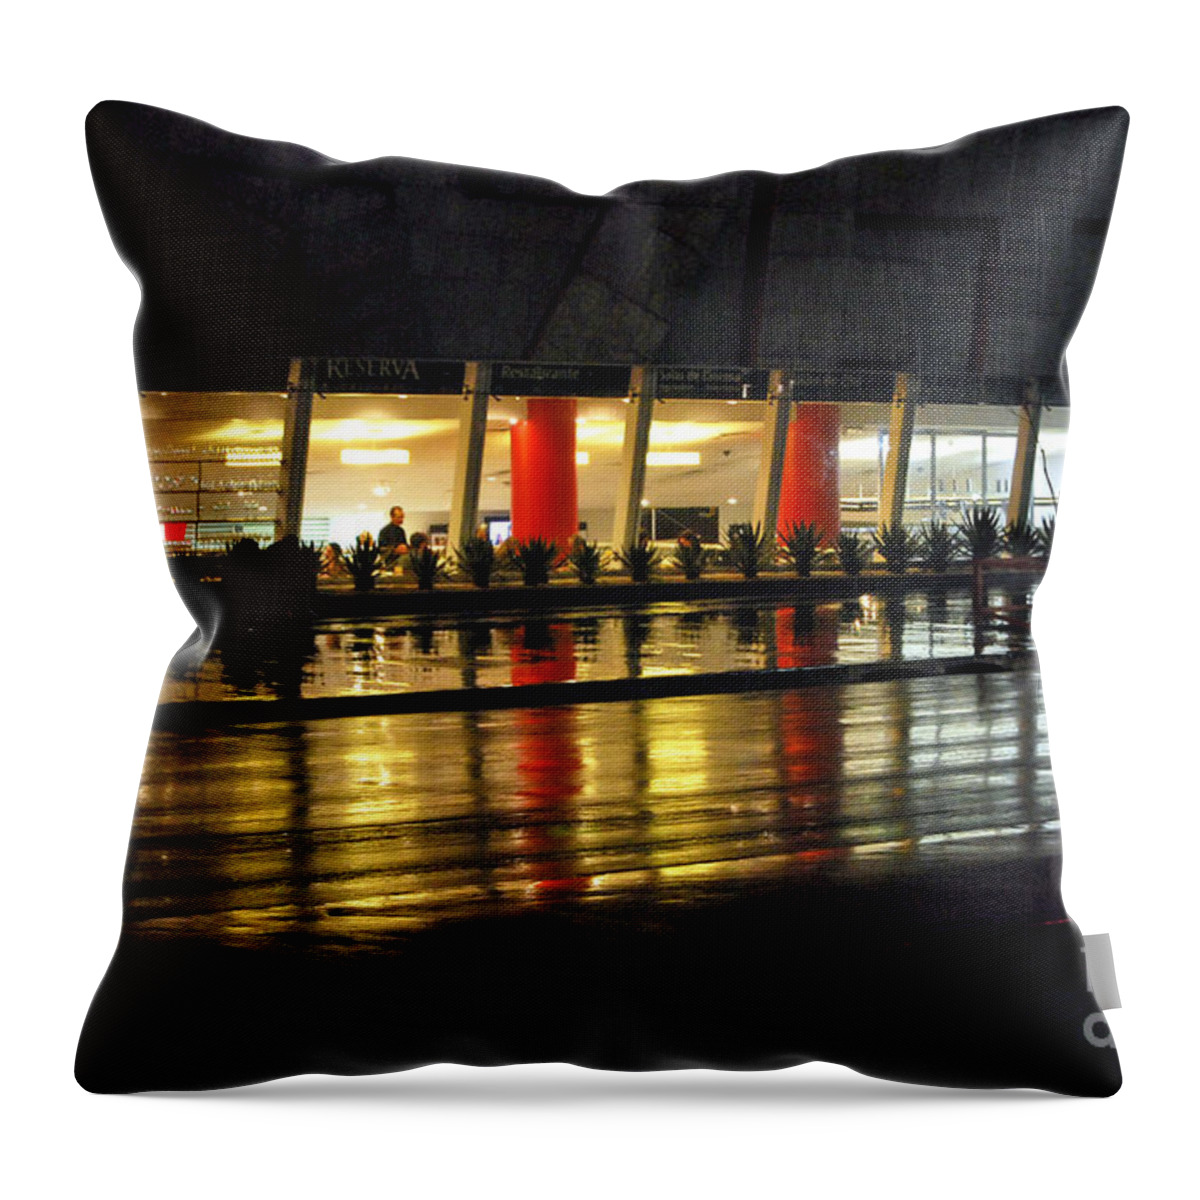 Reserva Cultural Throw Pillow featuring the photograph Avenida Paulista - Reserva Cultural by Carlos Alkmin